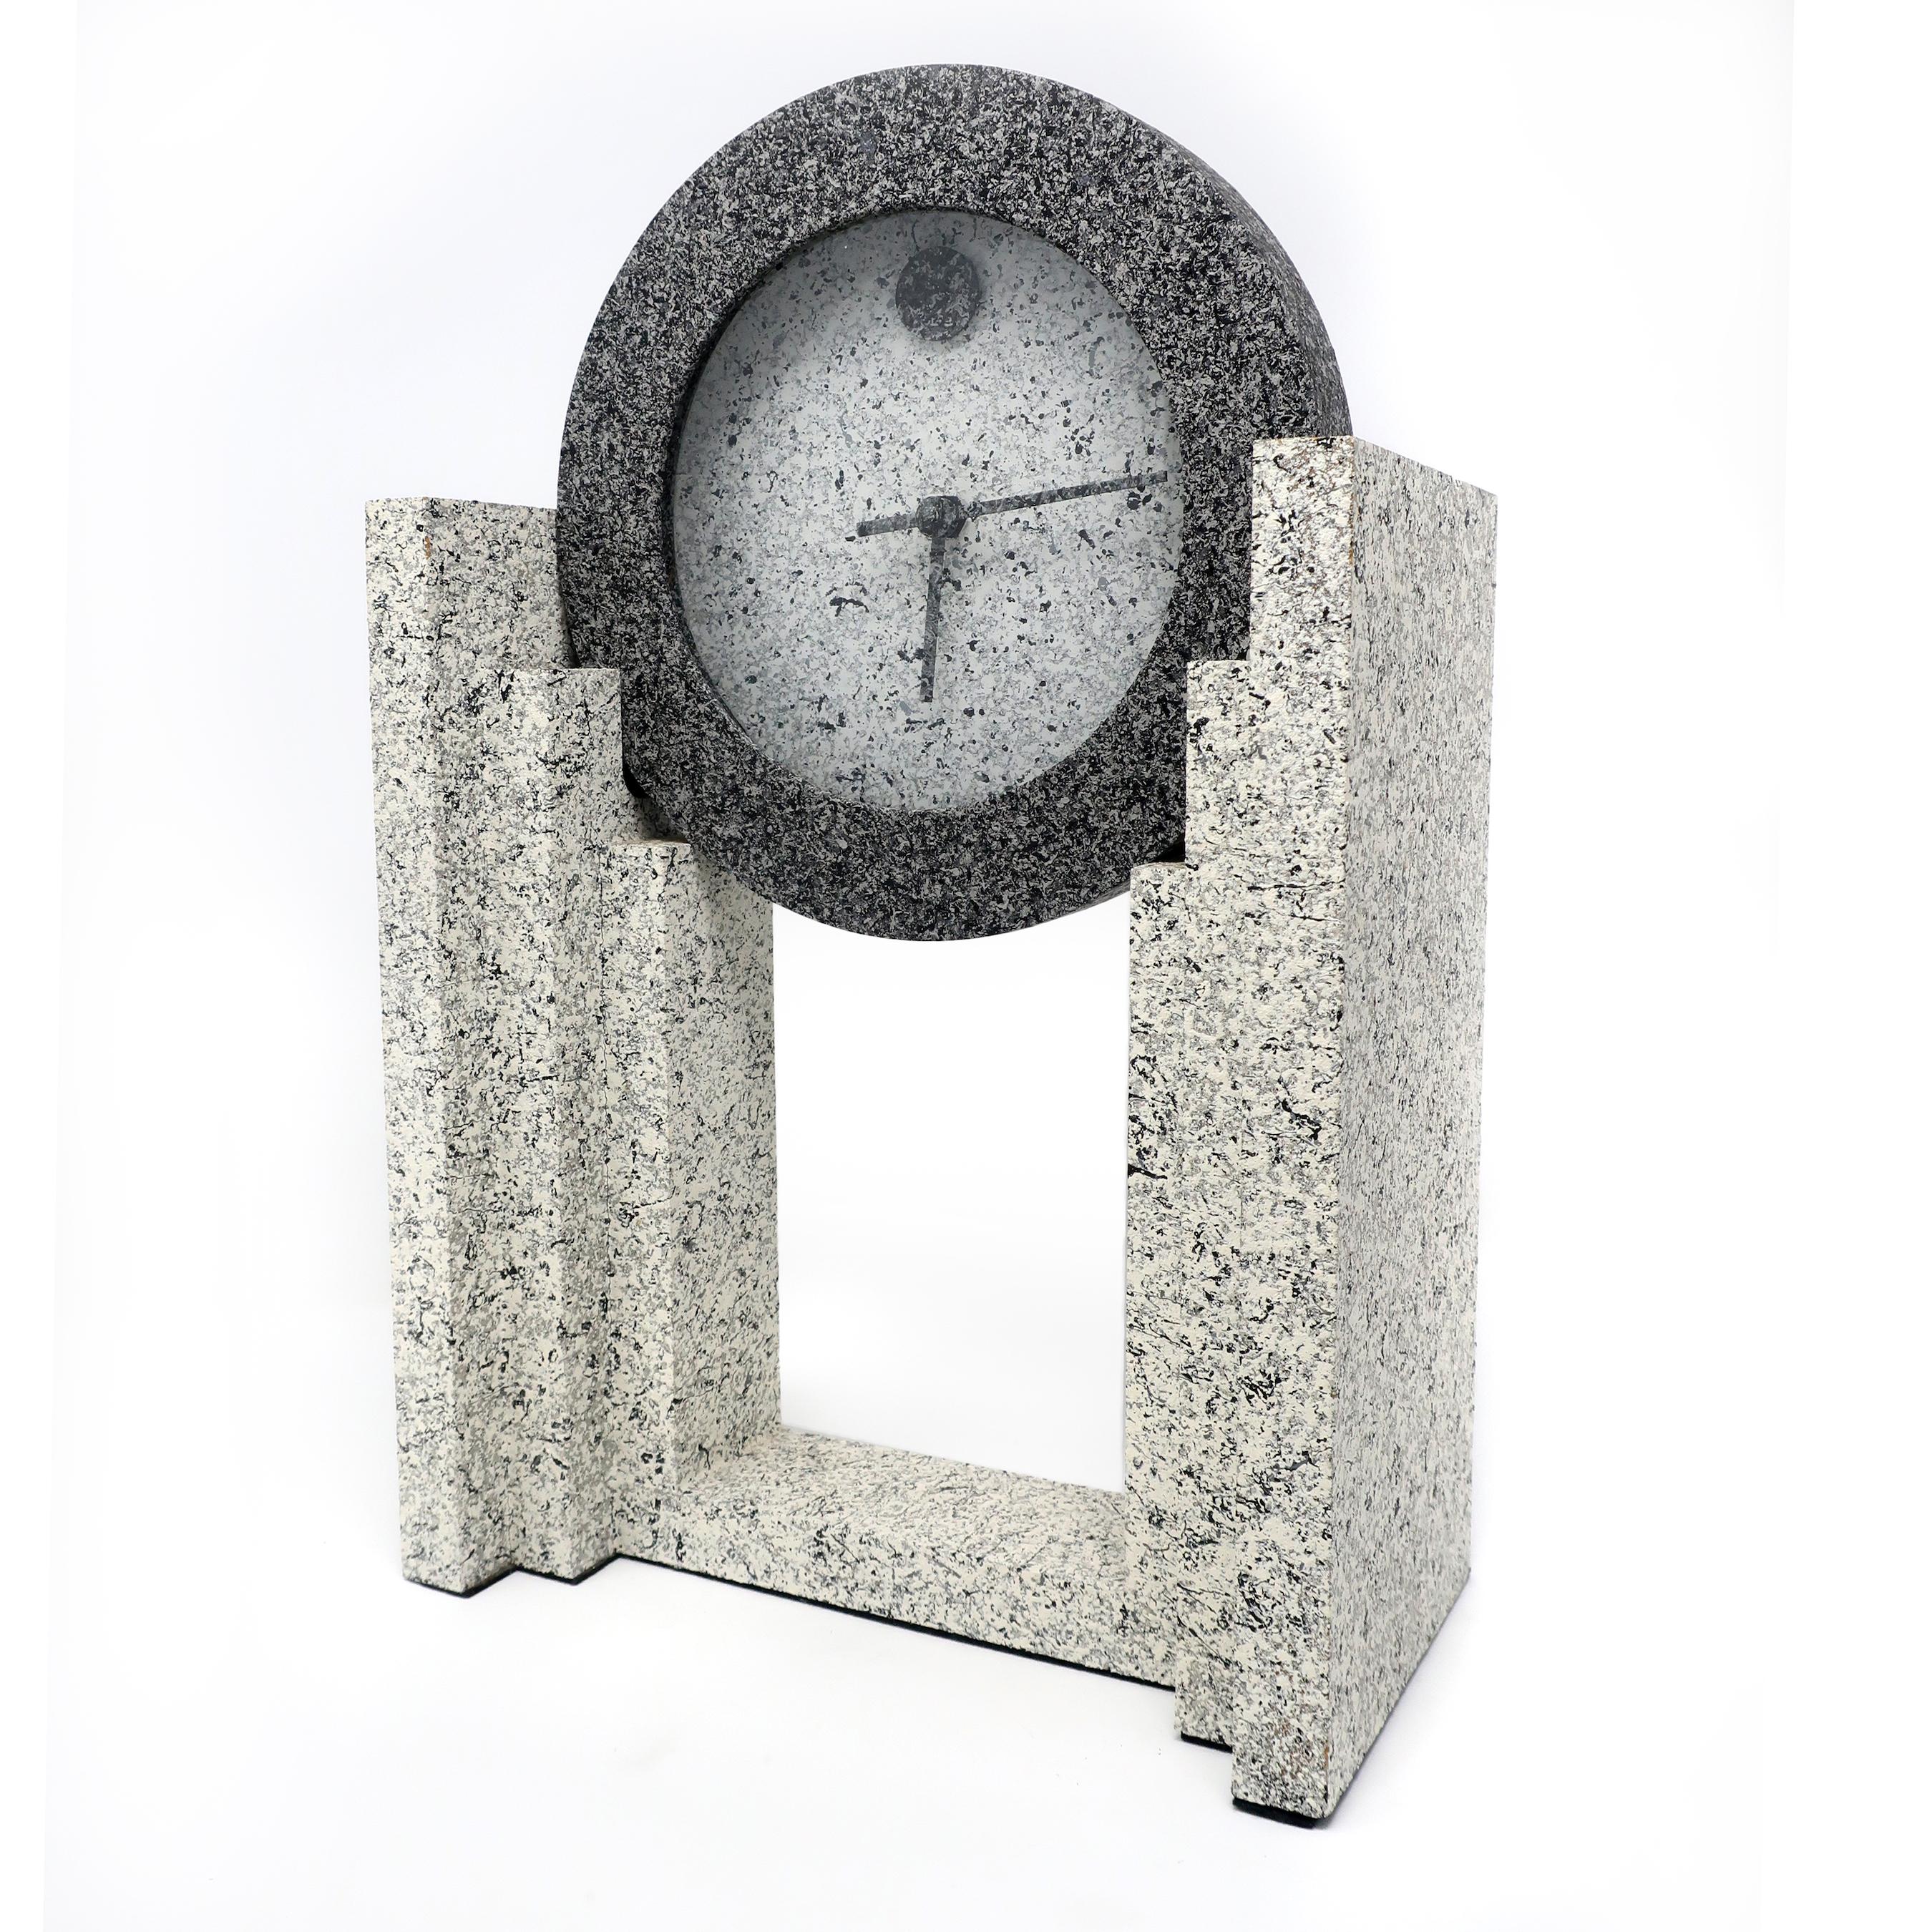 1980s Postmodern Mantel Clock by Empire Arts 2